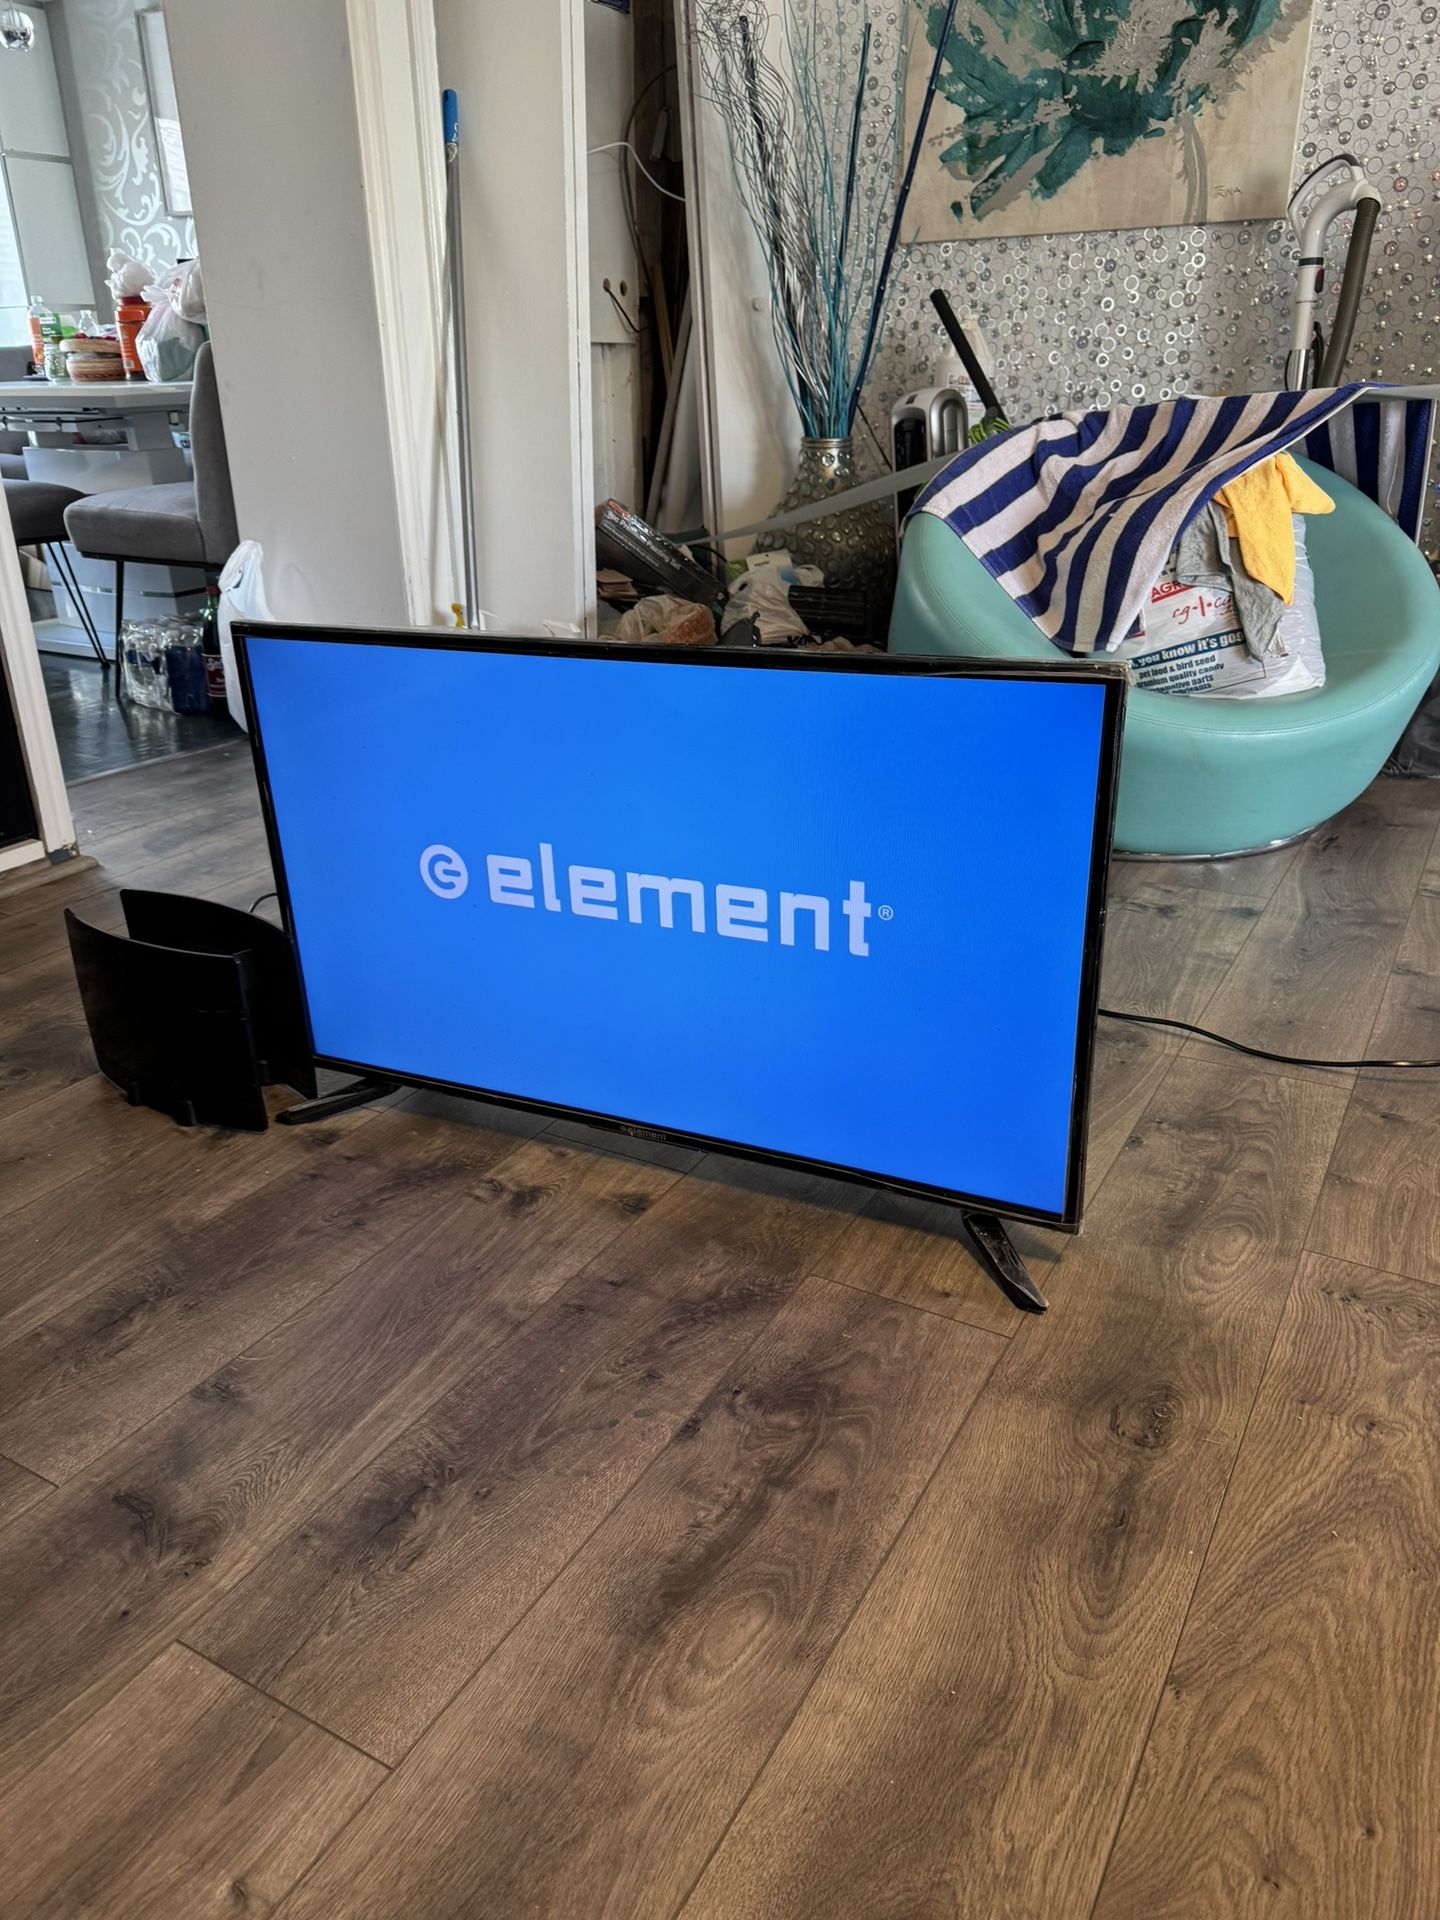 Element Tv 